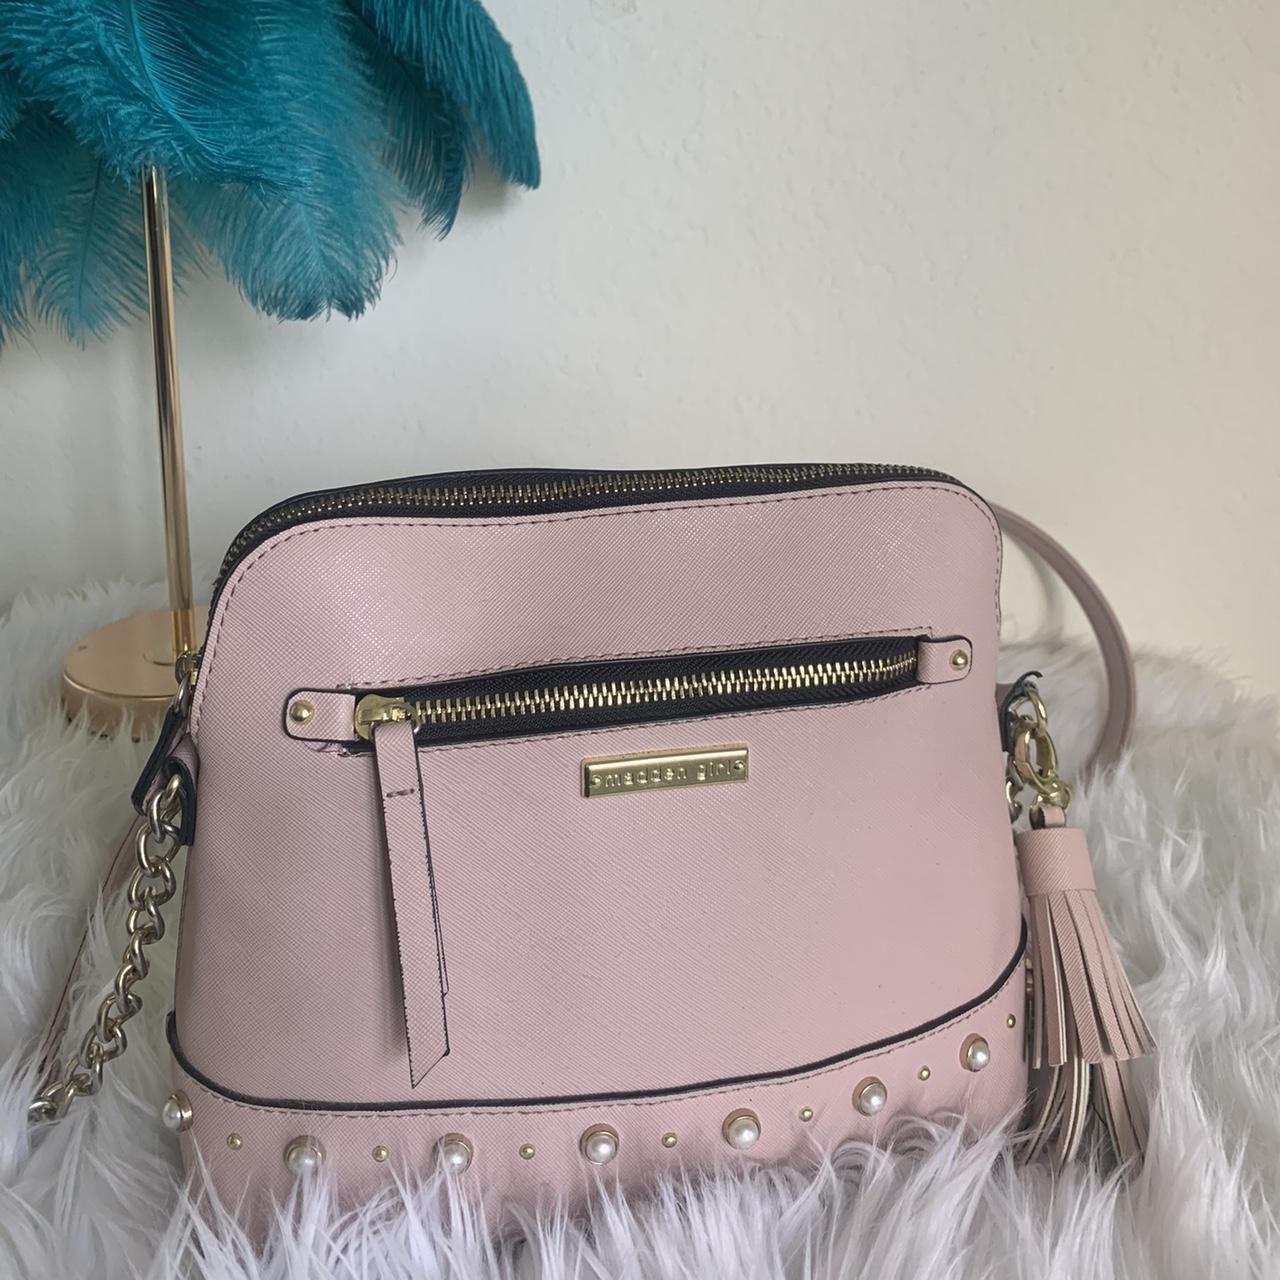 Medium light pink purse, with multiple pockets and... - Depop